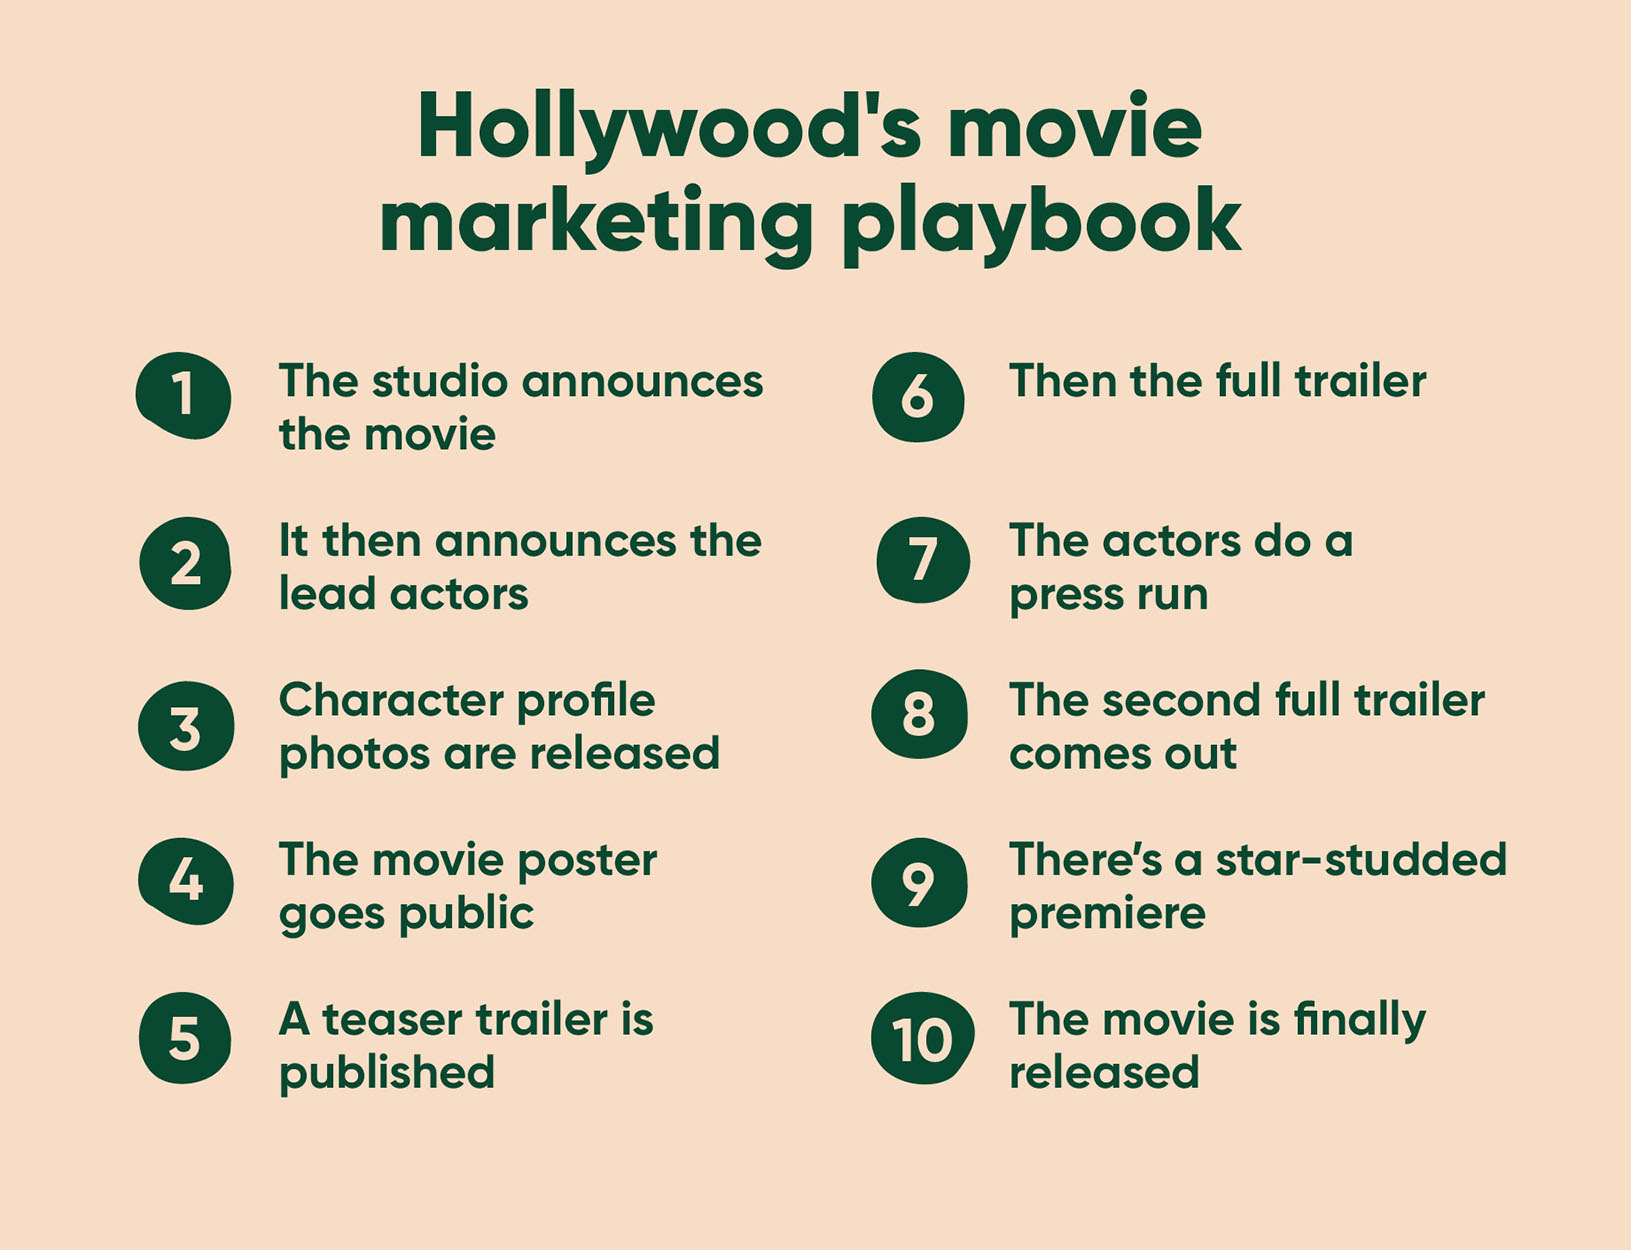 Hollywood's movie marketing playbook: 10 steps